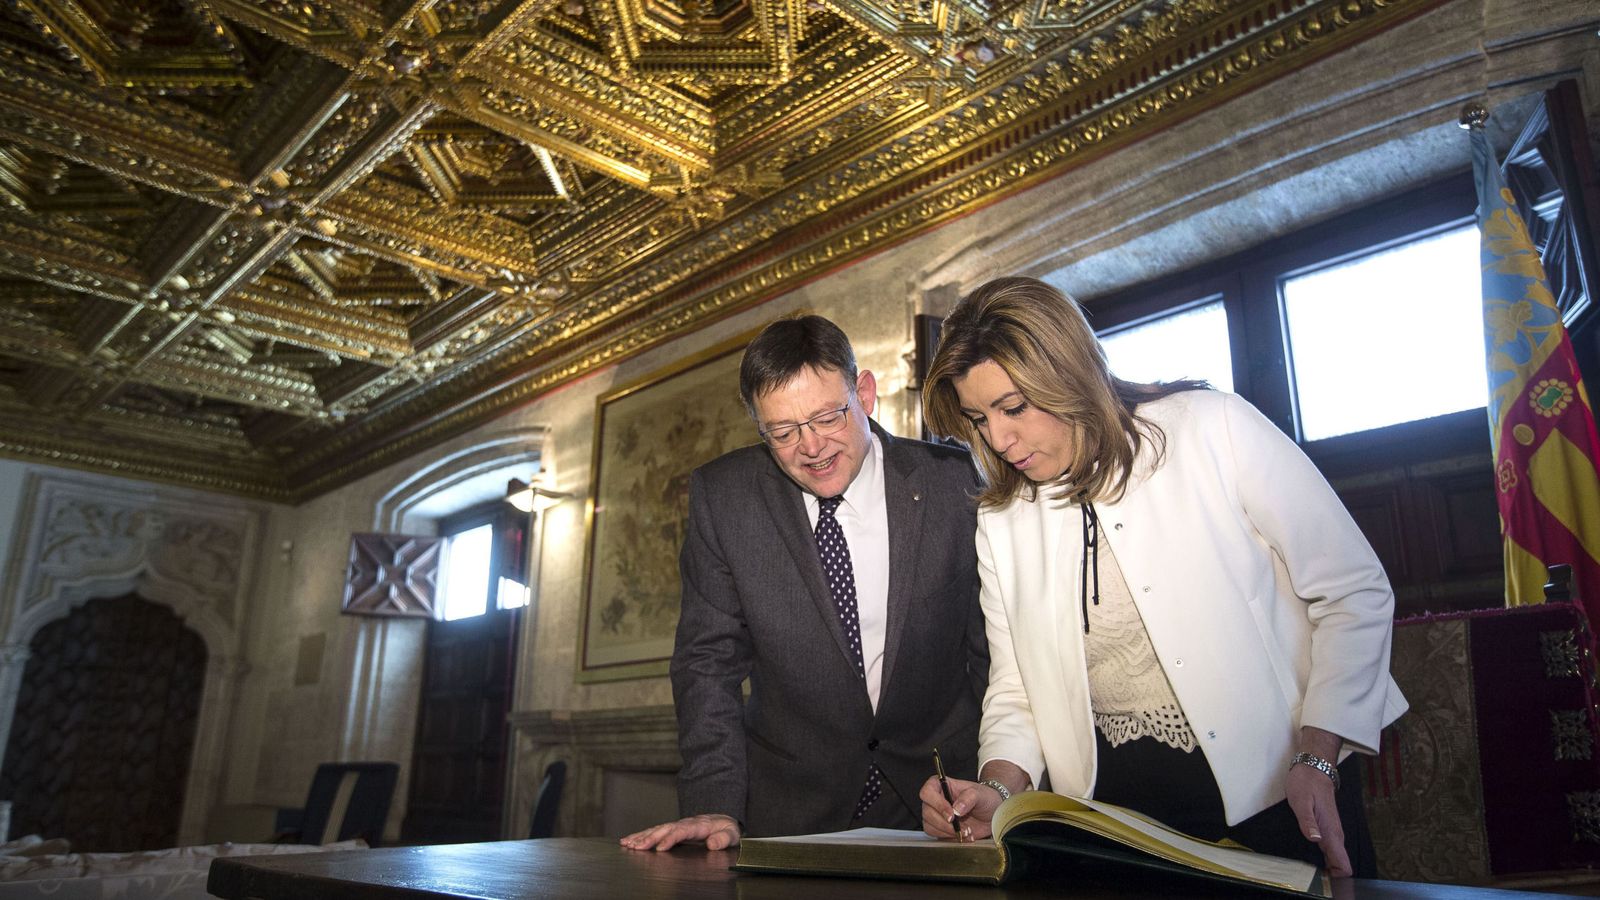 Foto: Díaz firma en el libro de honor del Palau de la Generalitat en presencia de Puig. (Efe)